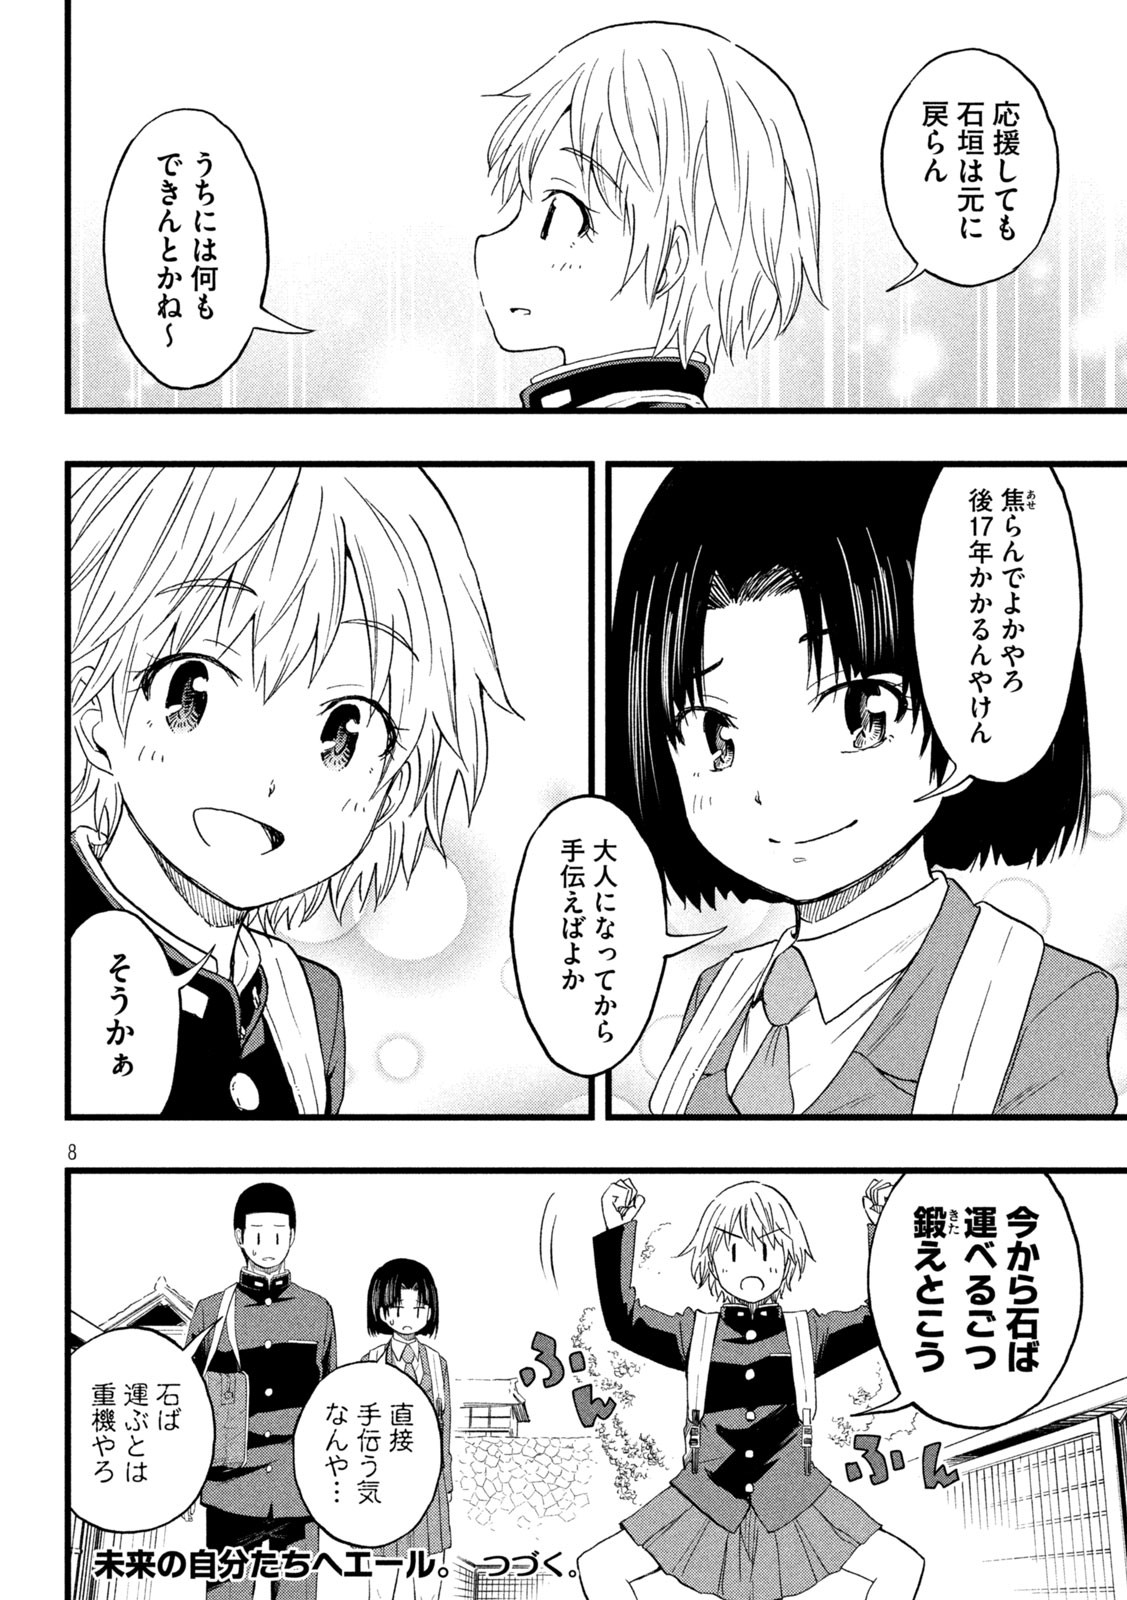 Koharu haru! - Chapter 74 - Page 4